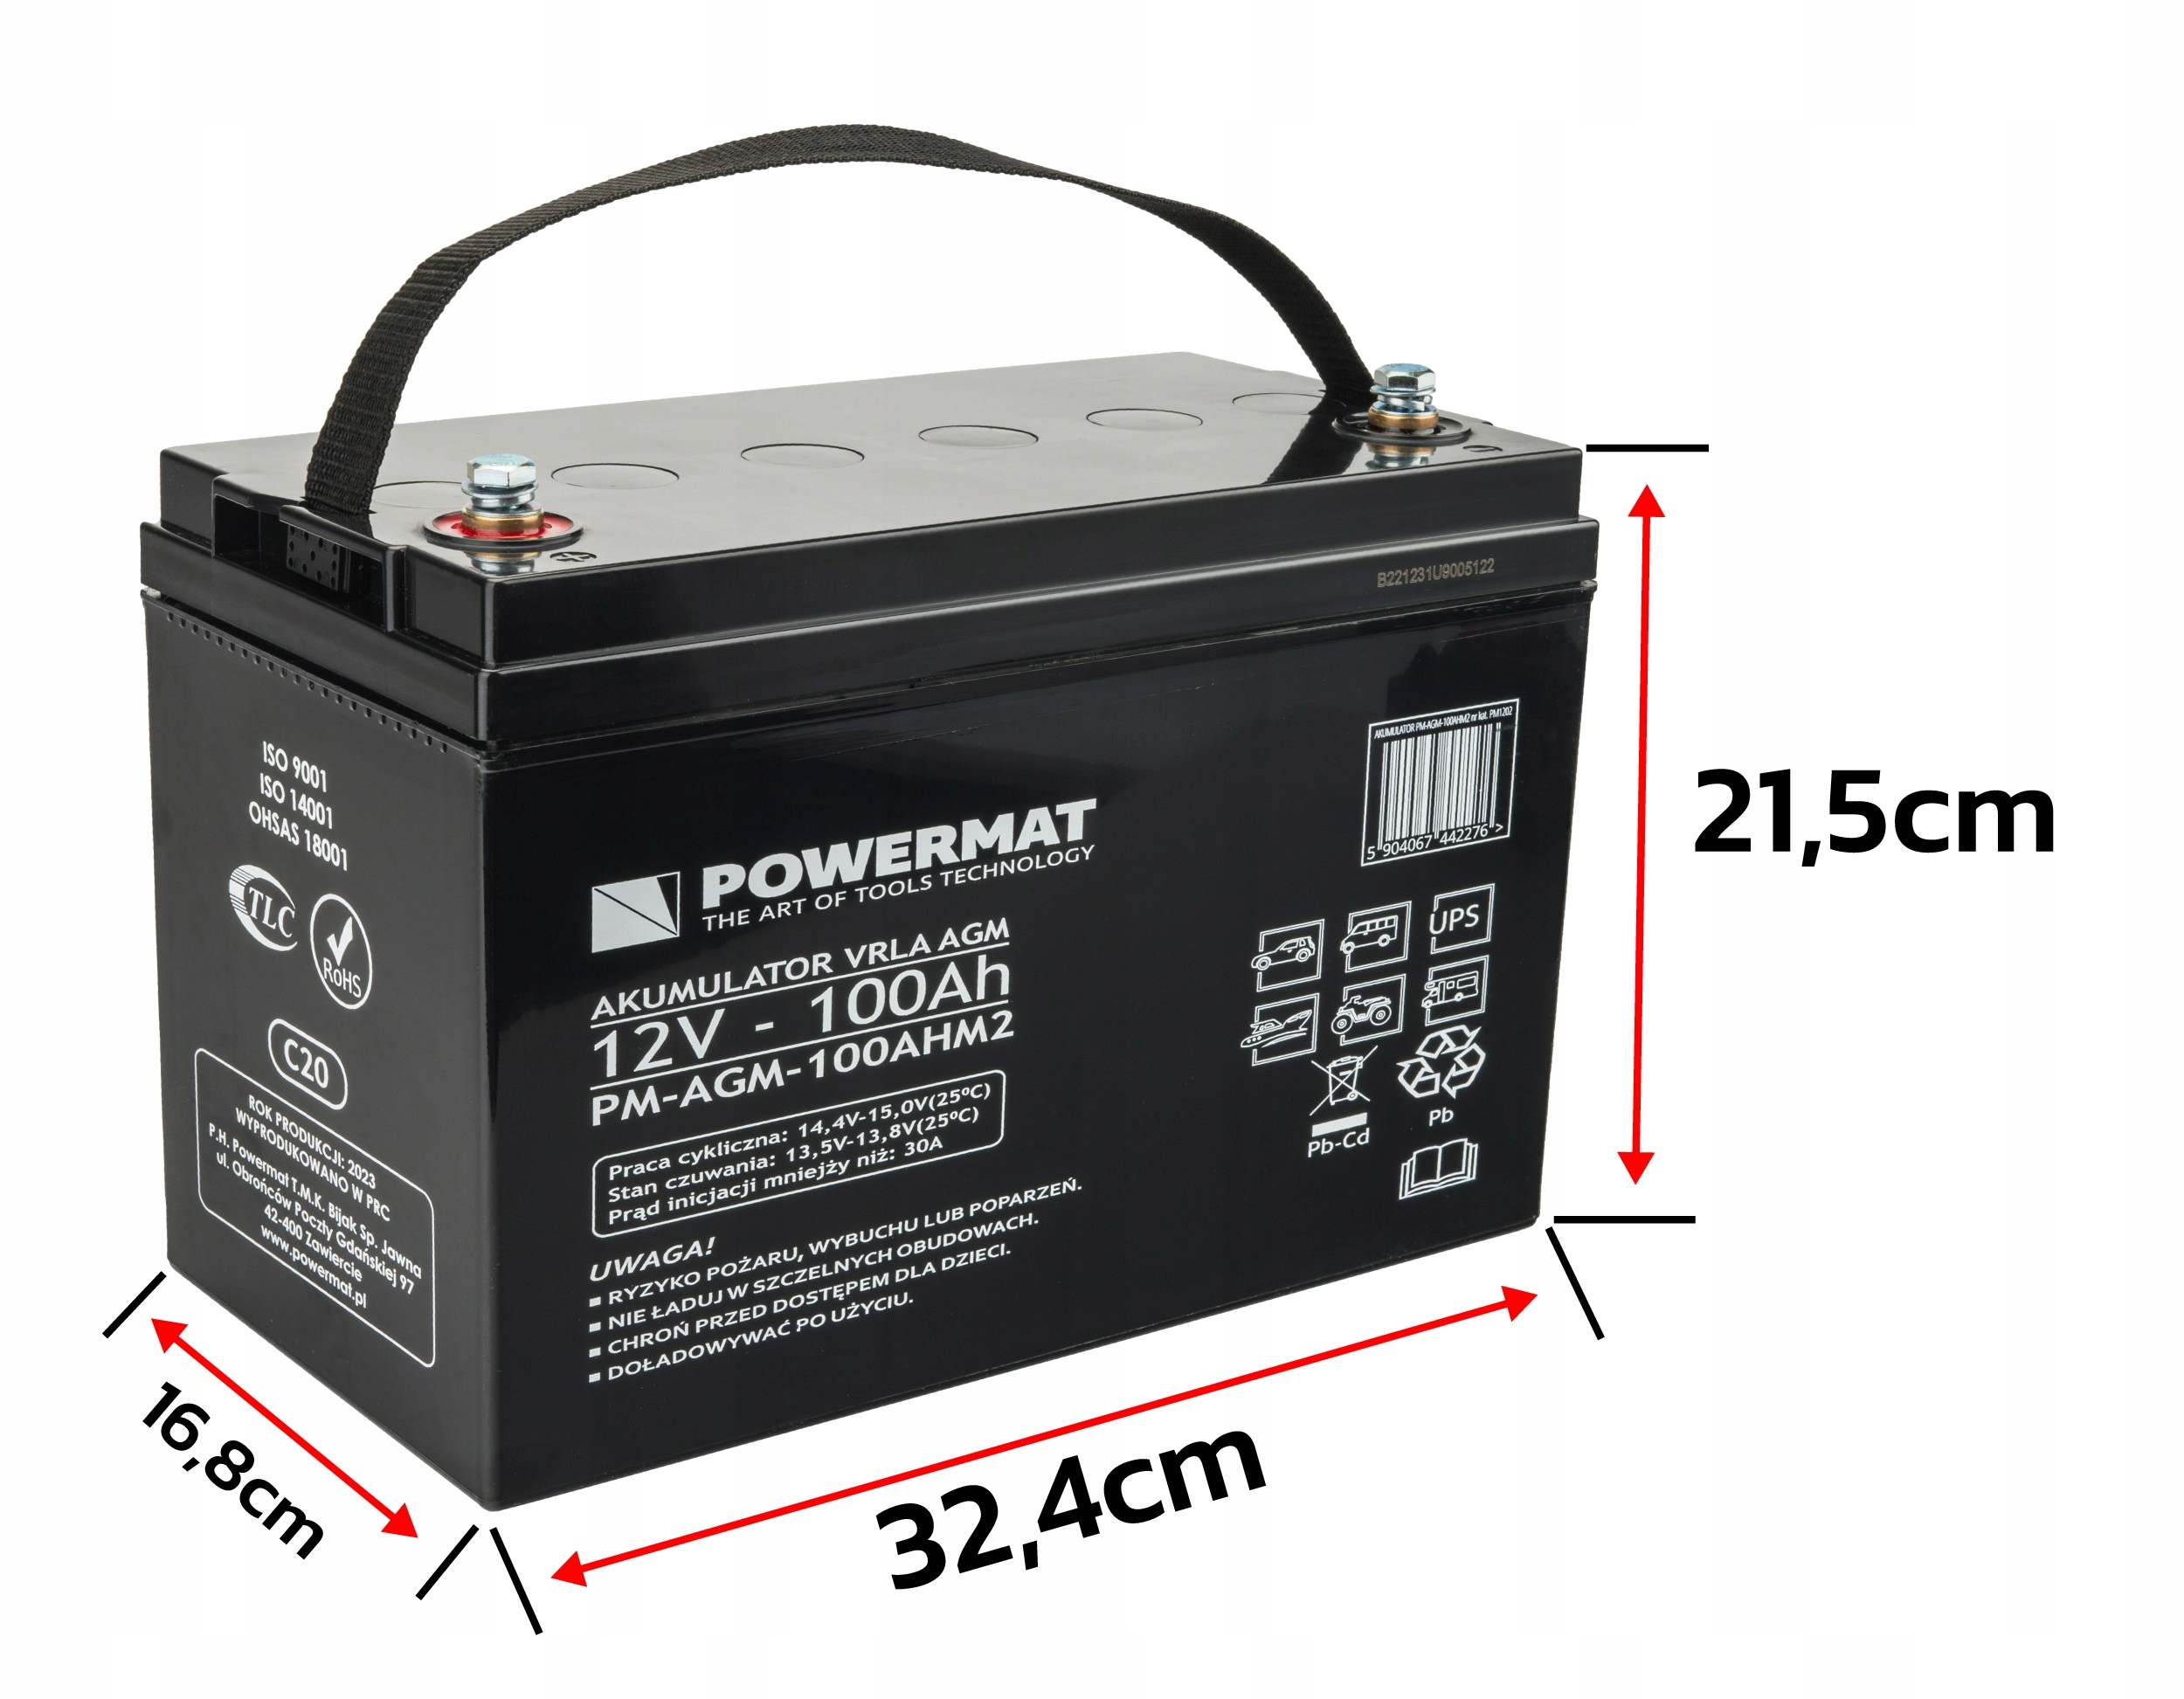 Akumulator VRLA AGM 12V 100Ah Bateria do UPS C20 Waga produktu z opakowaniem jednostkowym 25.1 kg